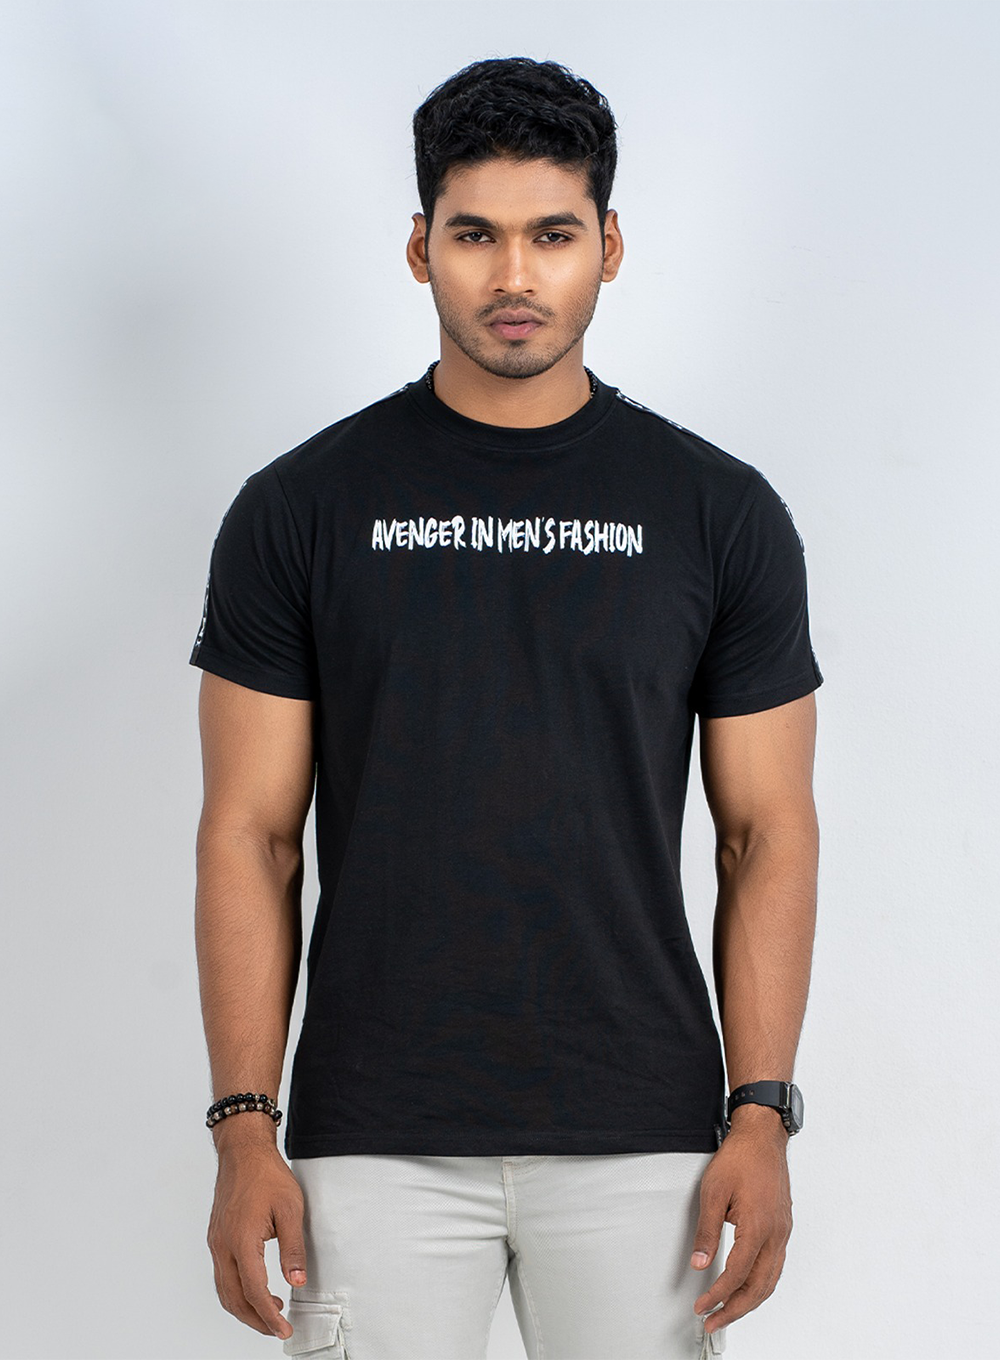 Men's T-Shirt Style IMTS-007(A)